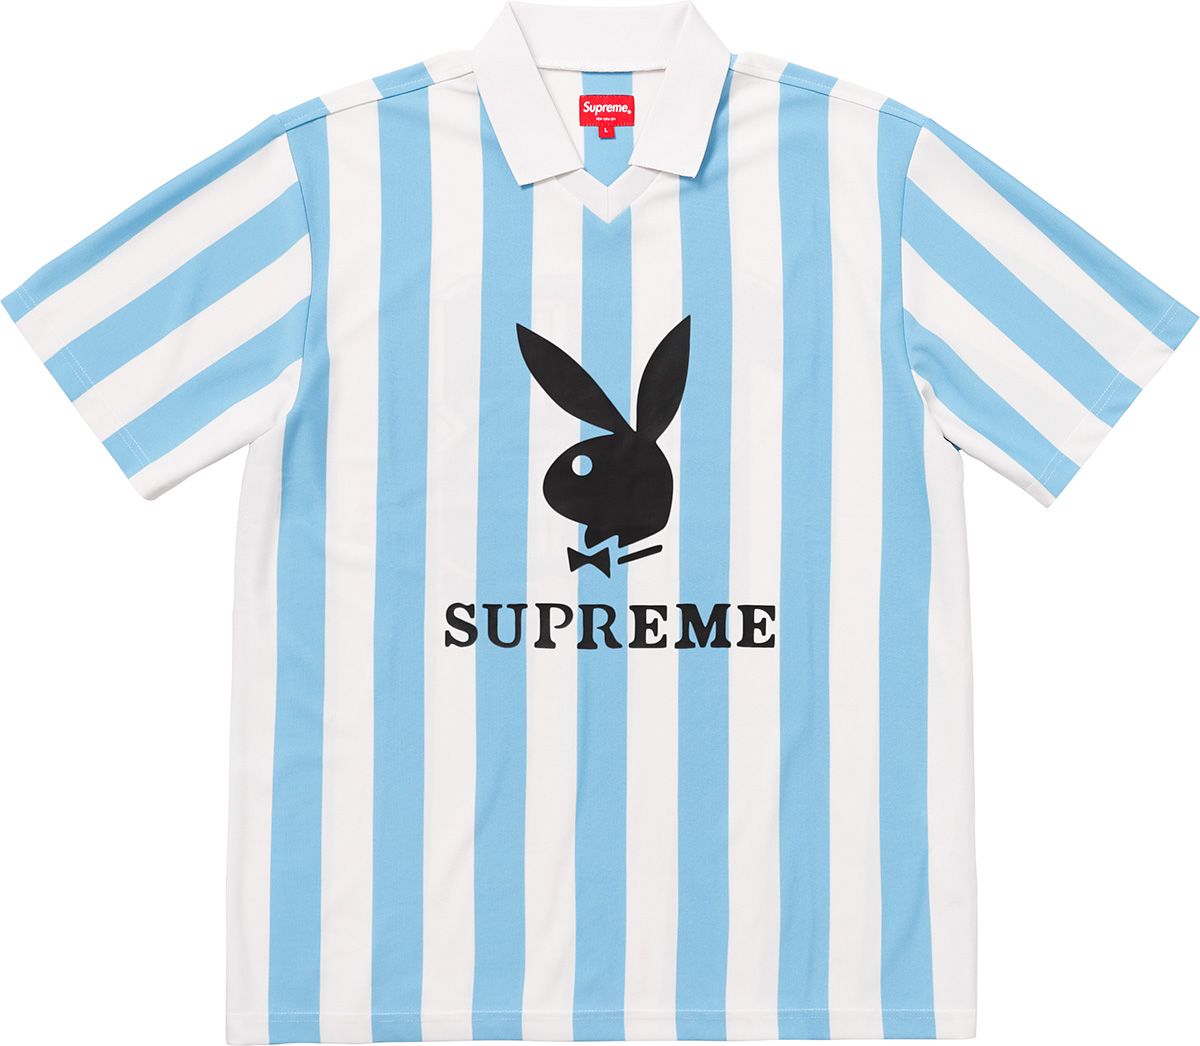 Supreme®/Playboy© Soccer Jersey – Supreme